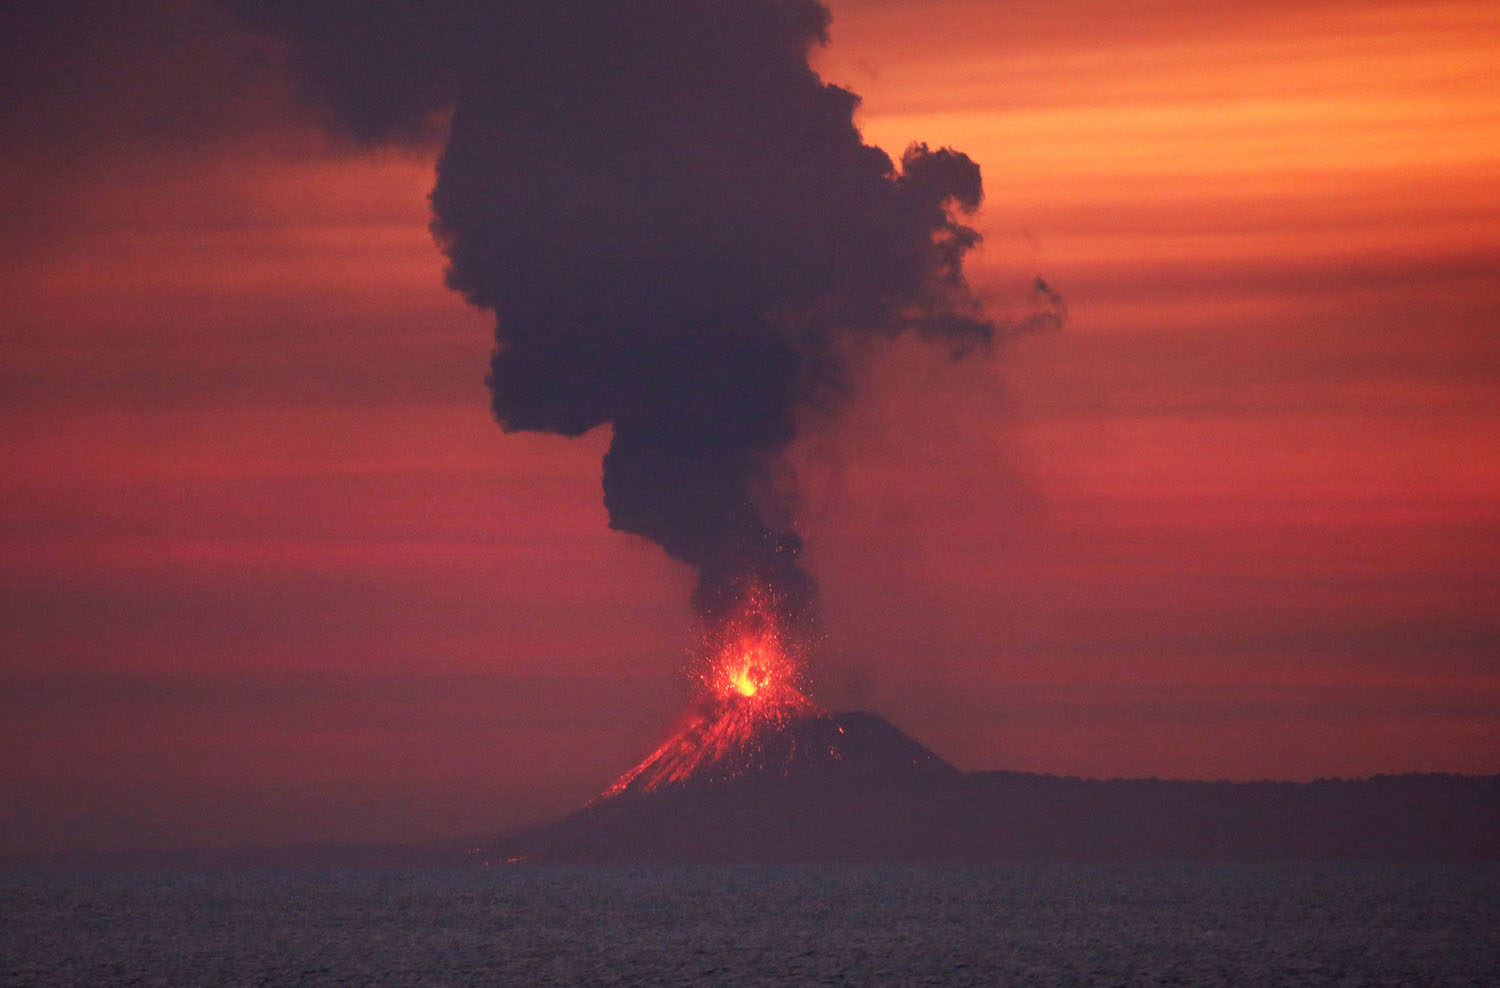 The Anak Krakatau